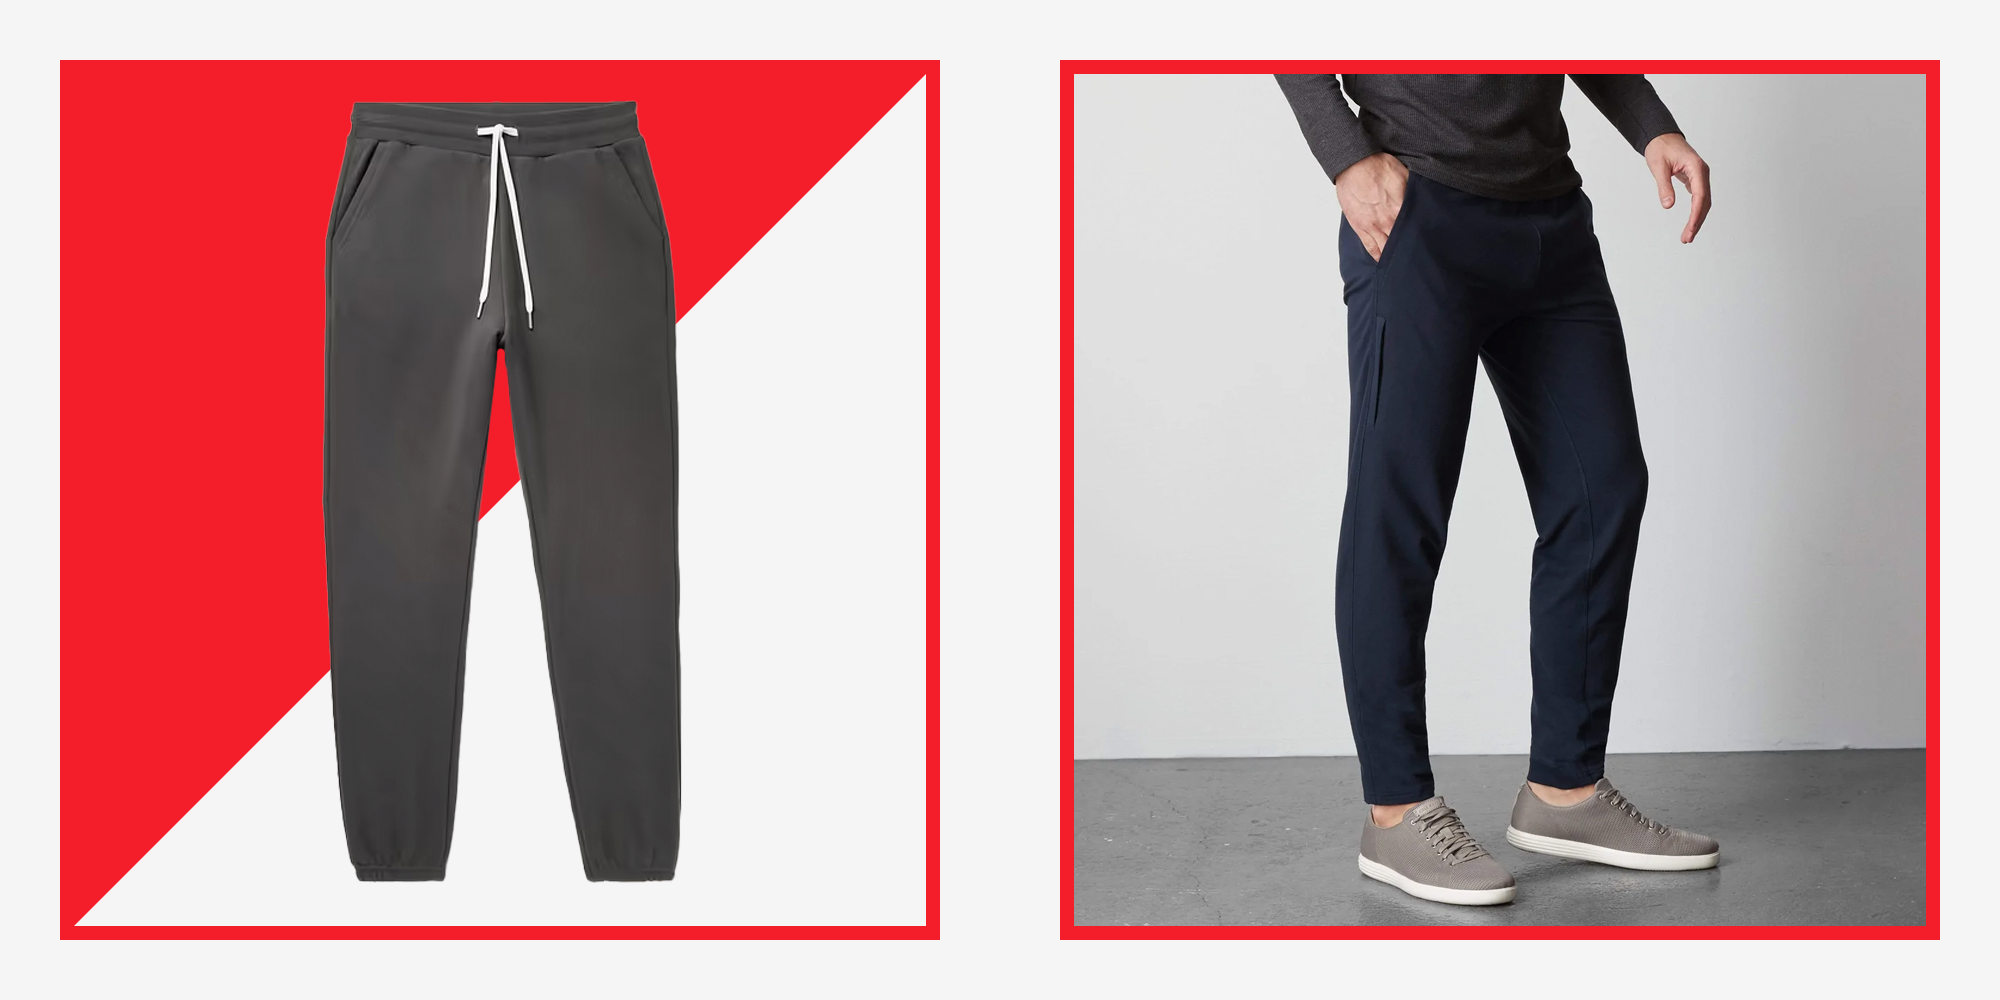 Sweatpants for Men Design Drawstring Pocket Mens Sweatpants Jogging Outdoor Gym Sweatpants Exercise Men's Pants 